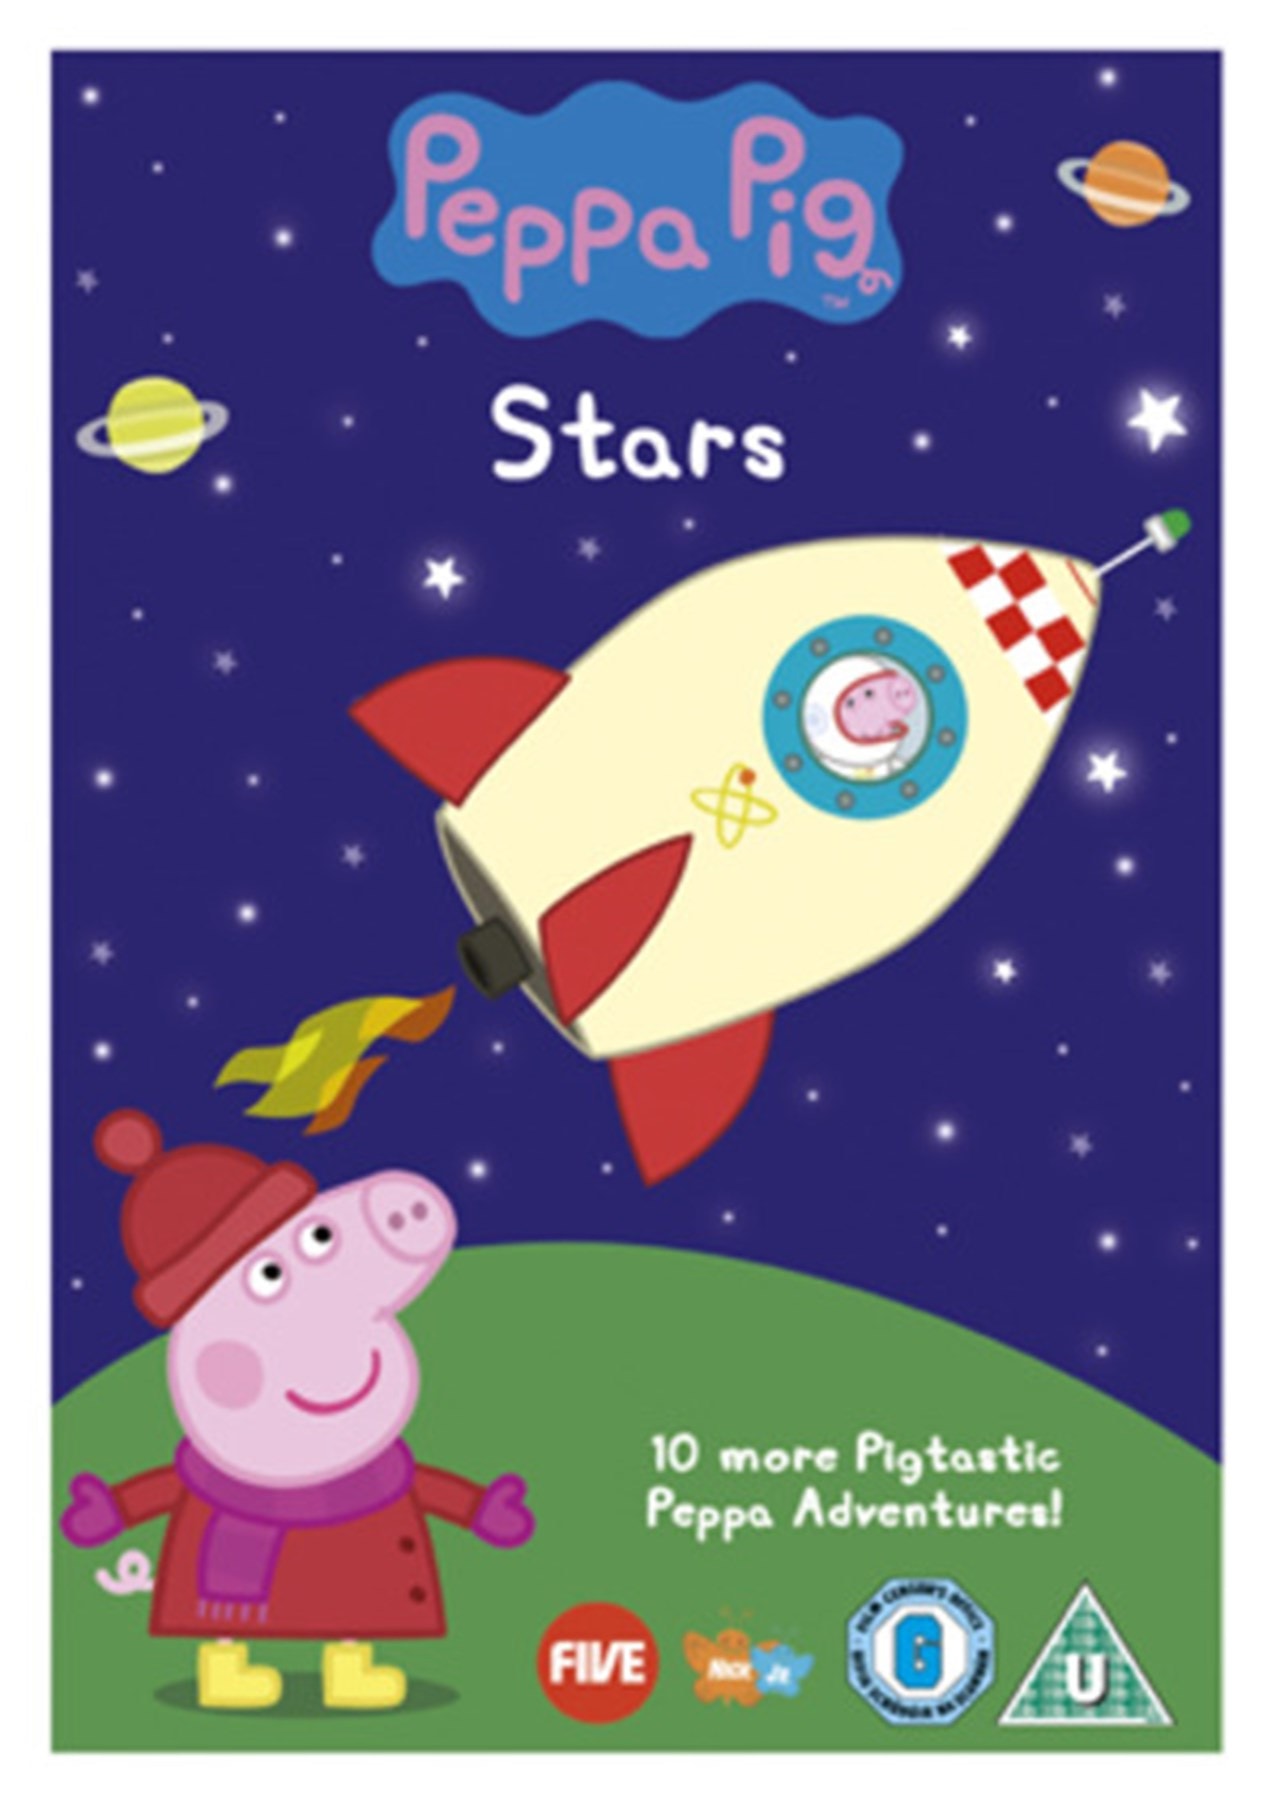 Peppa Pig: Stars | DVD | Free shipping over £20 | HMV Store